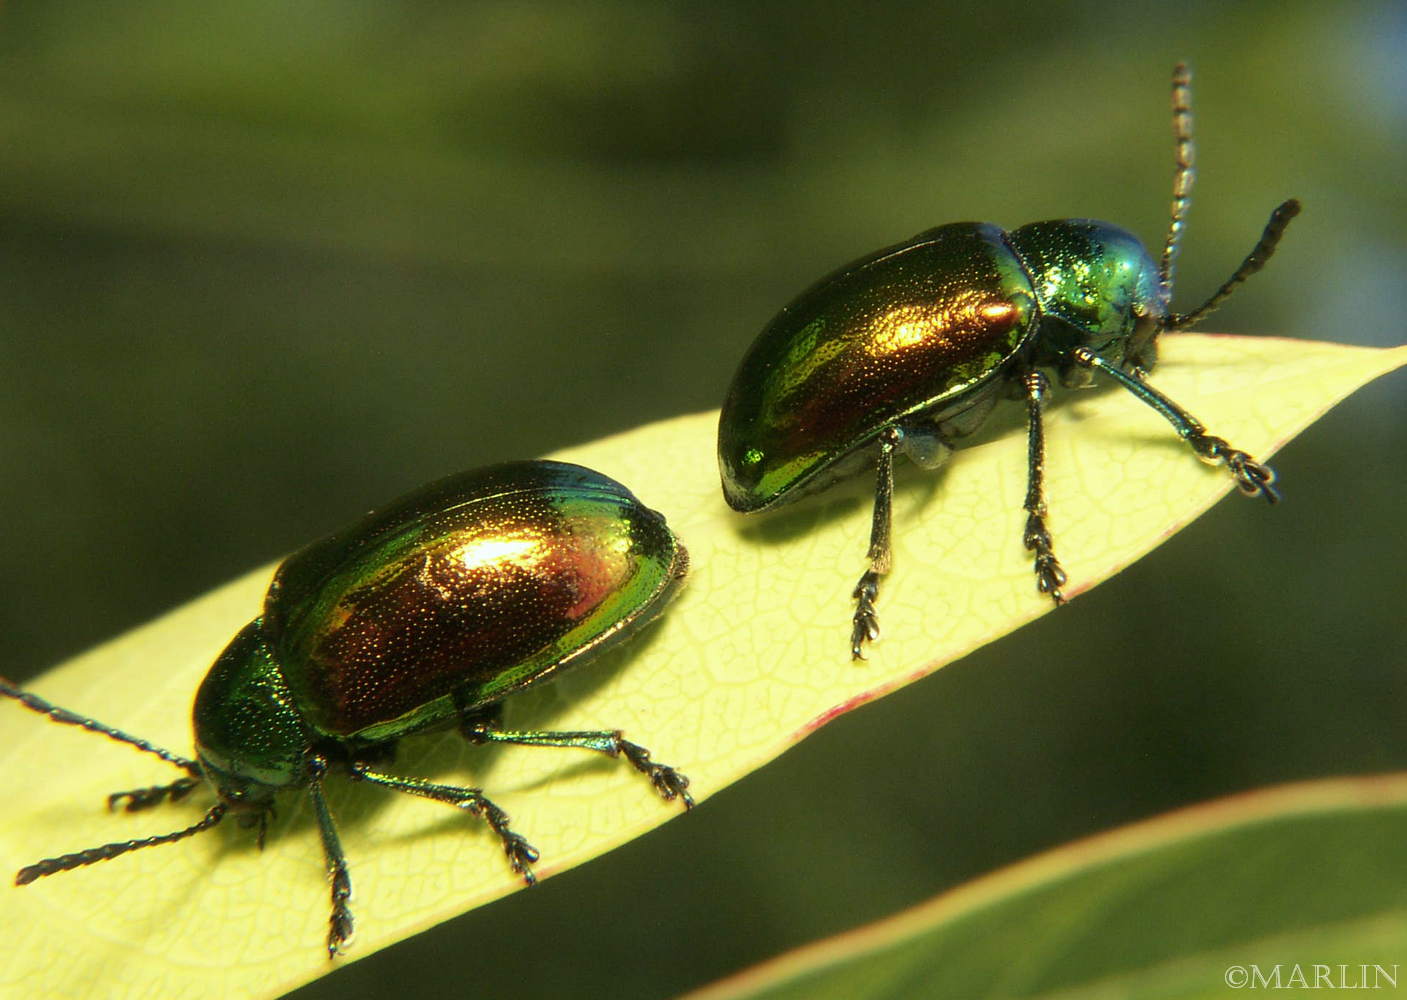 Dogbane Leaf Beetles